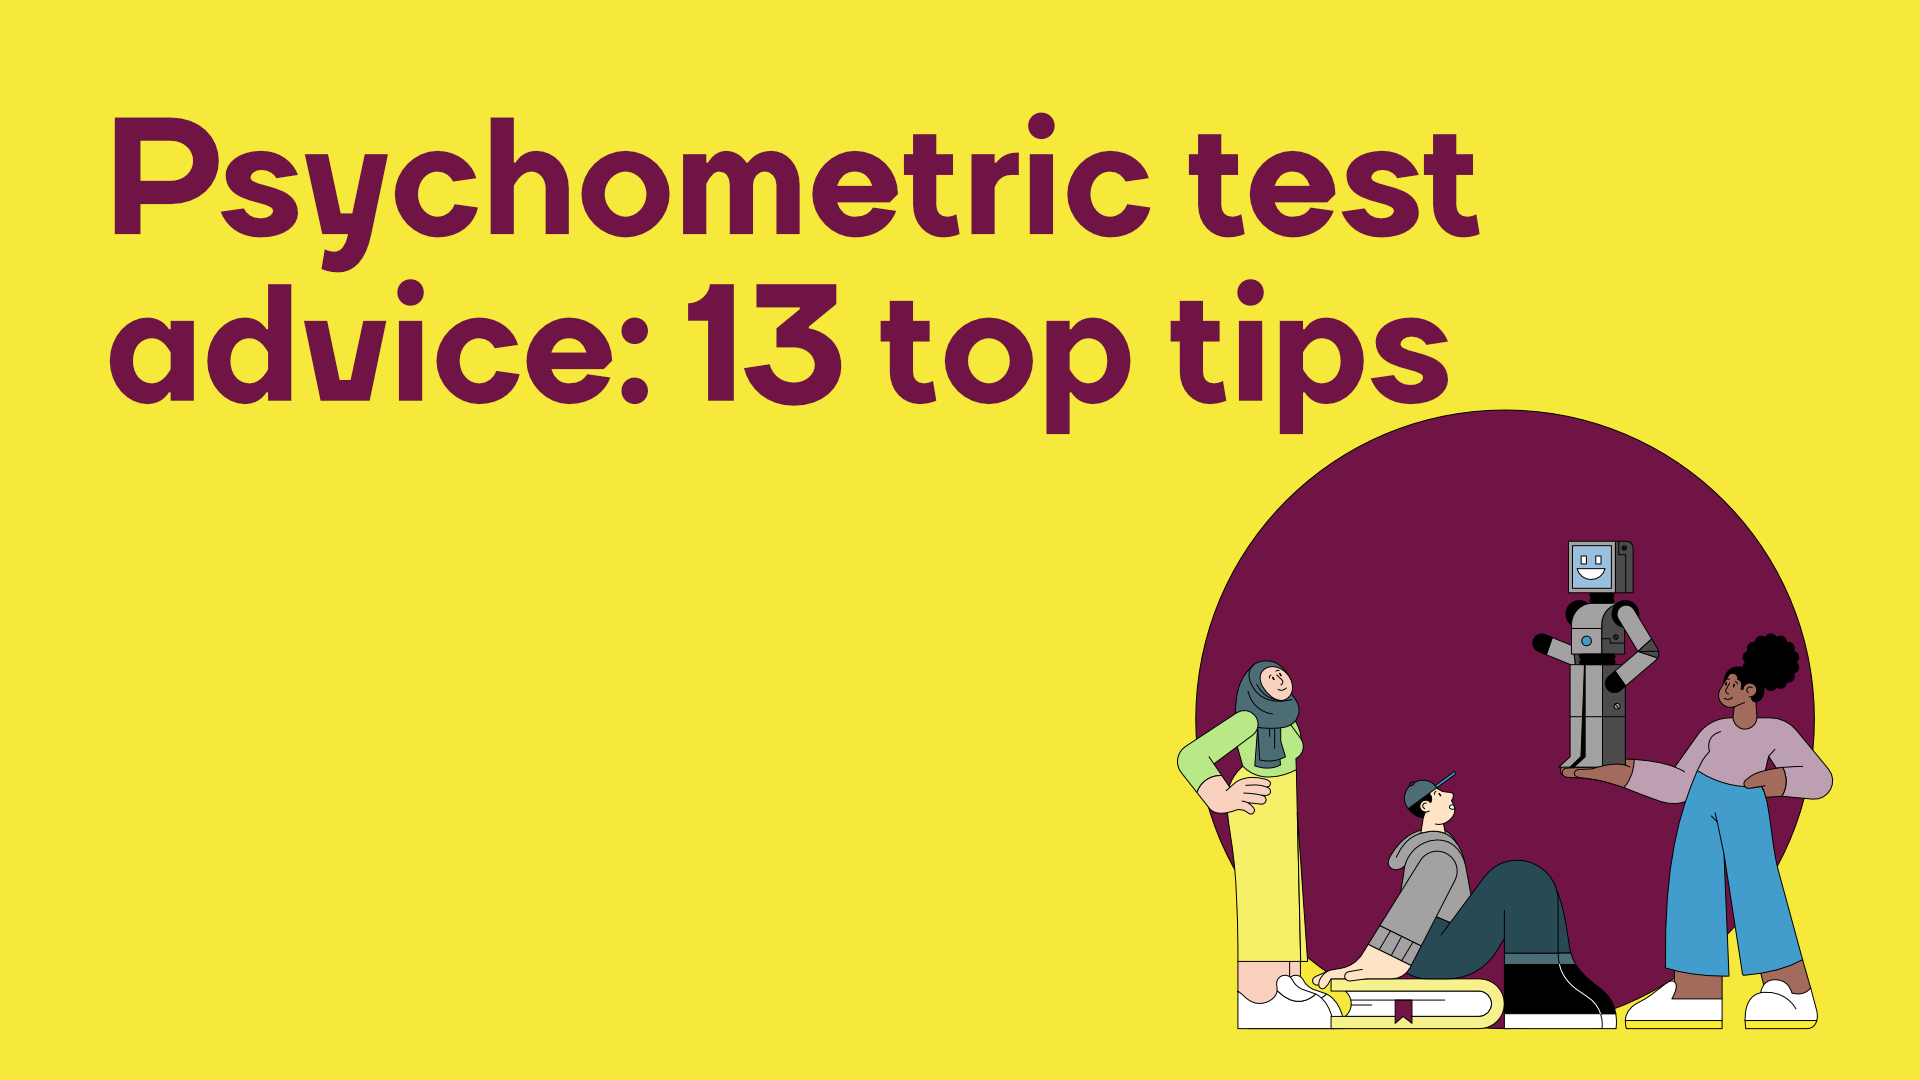 Psychometric test advice - 13 top tips